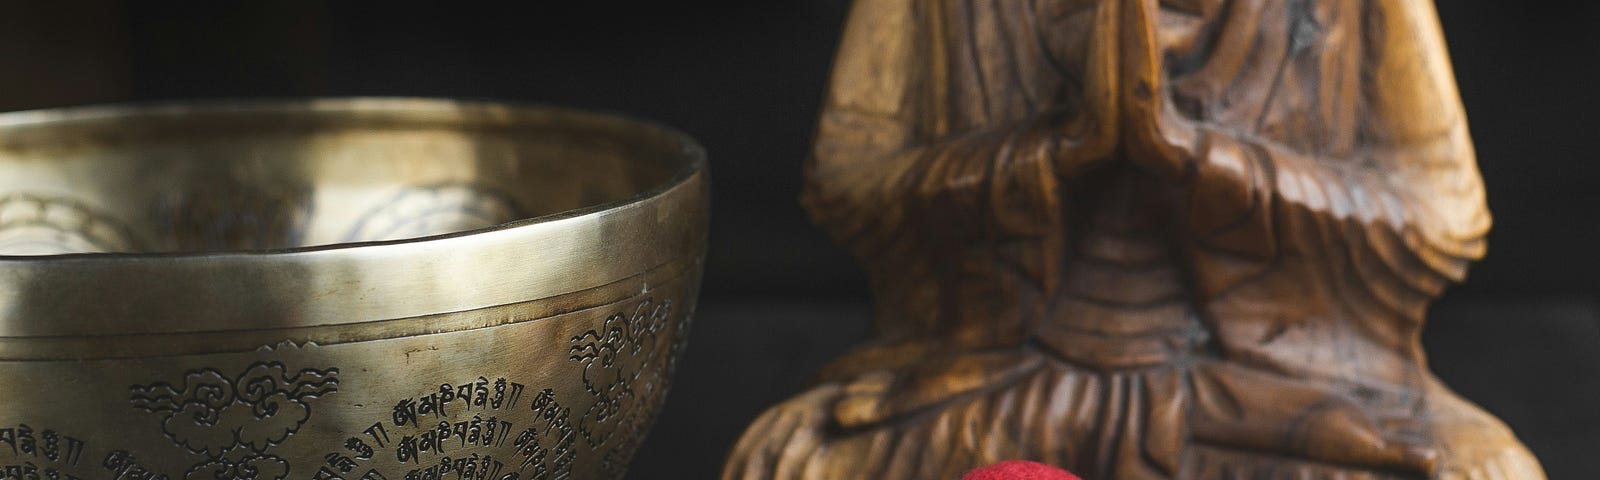 Spiritual items, a Buddha statue, and a singing bowl.